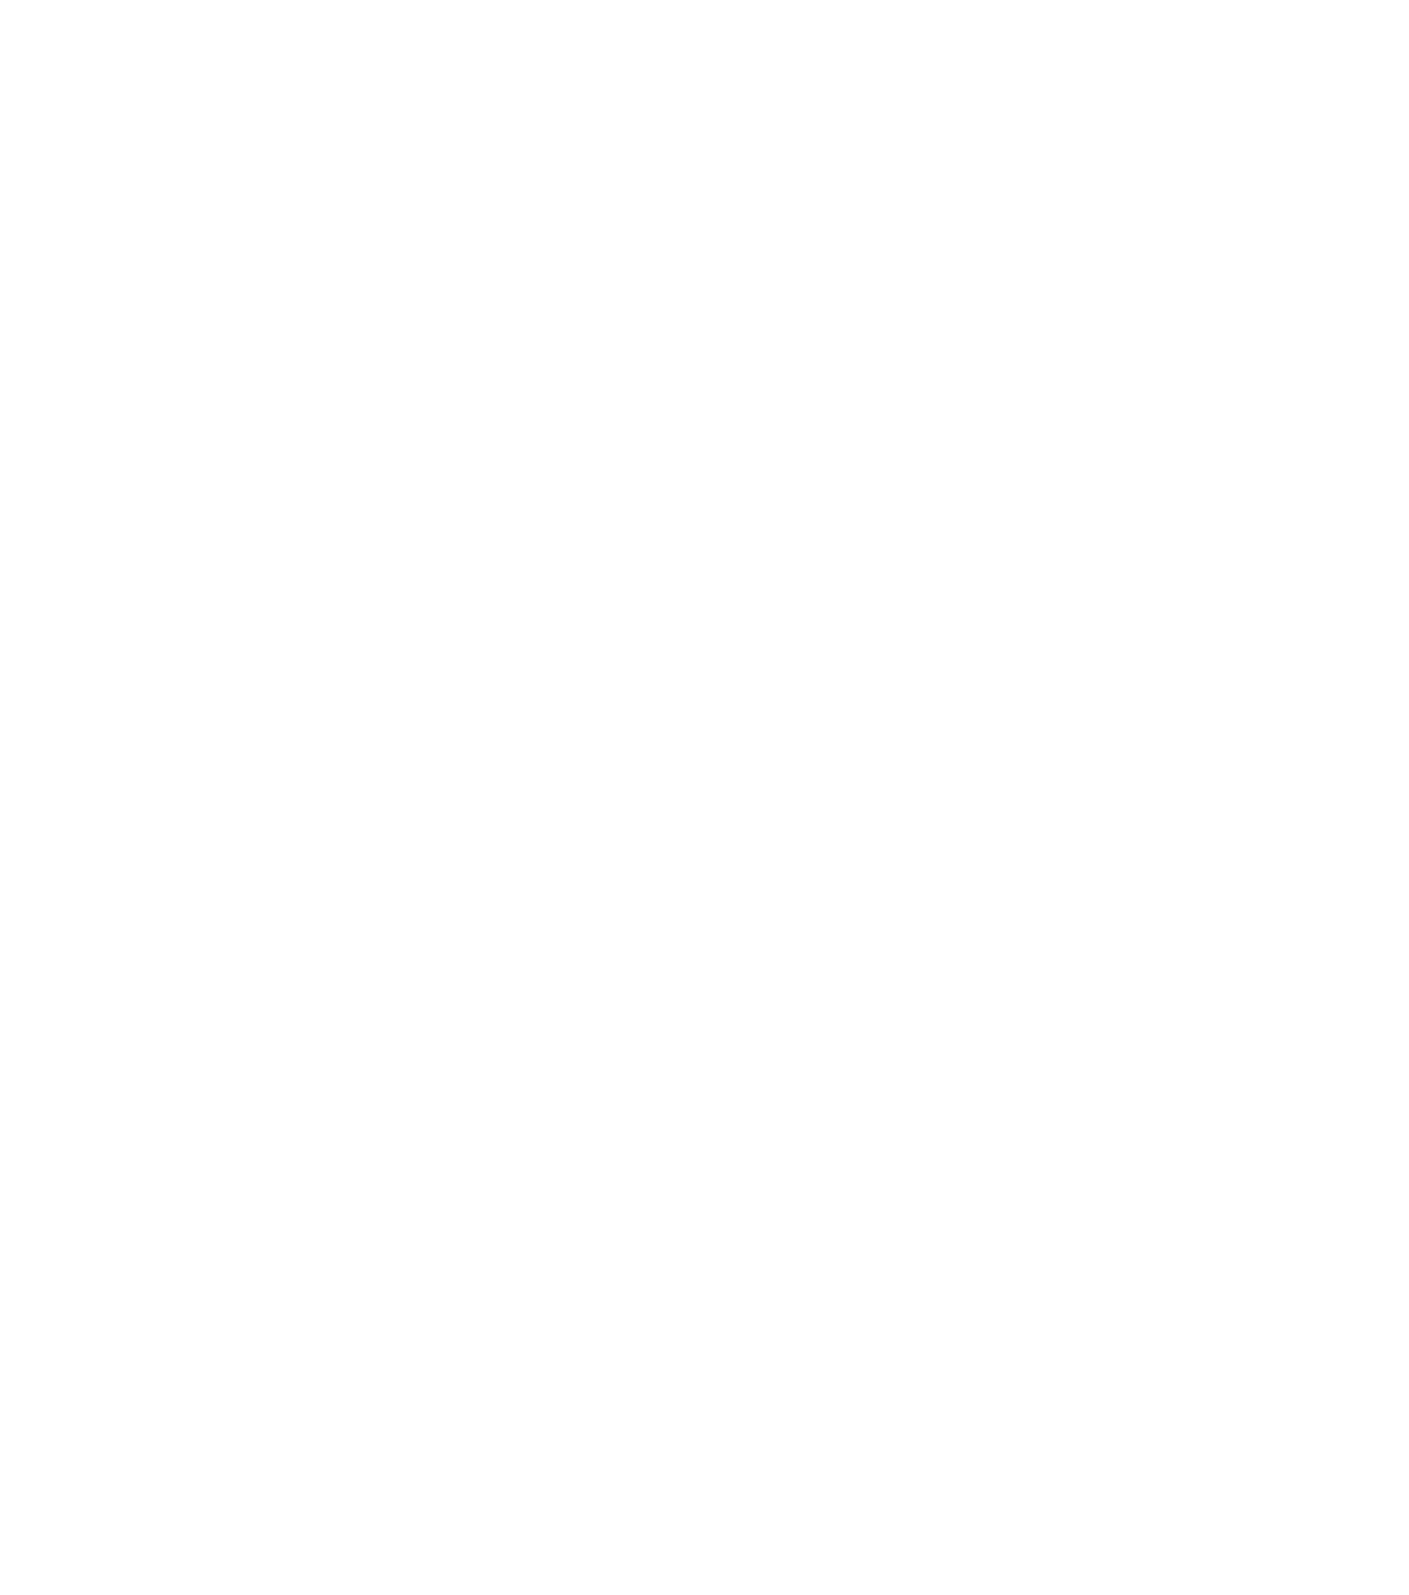 Panasonic logo for dark backgrounds (transparent PNG)